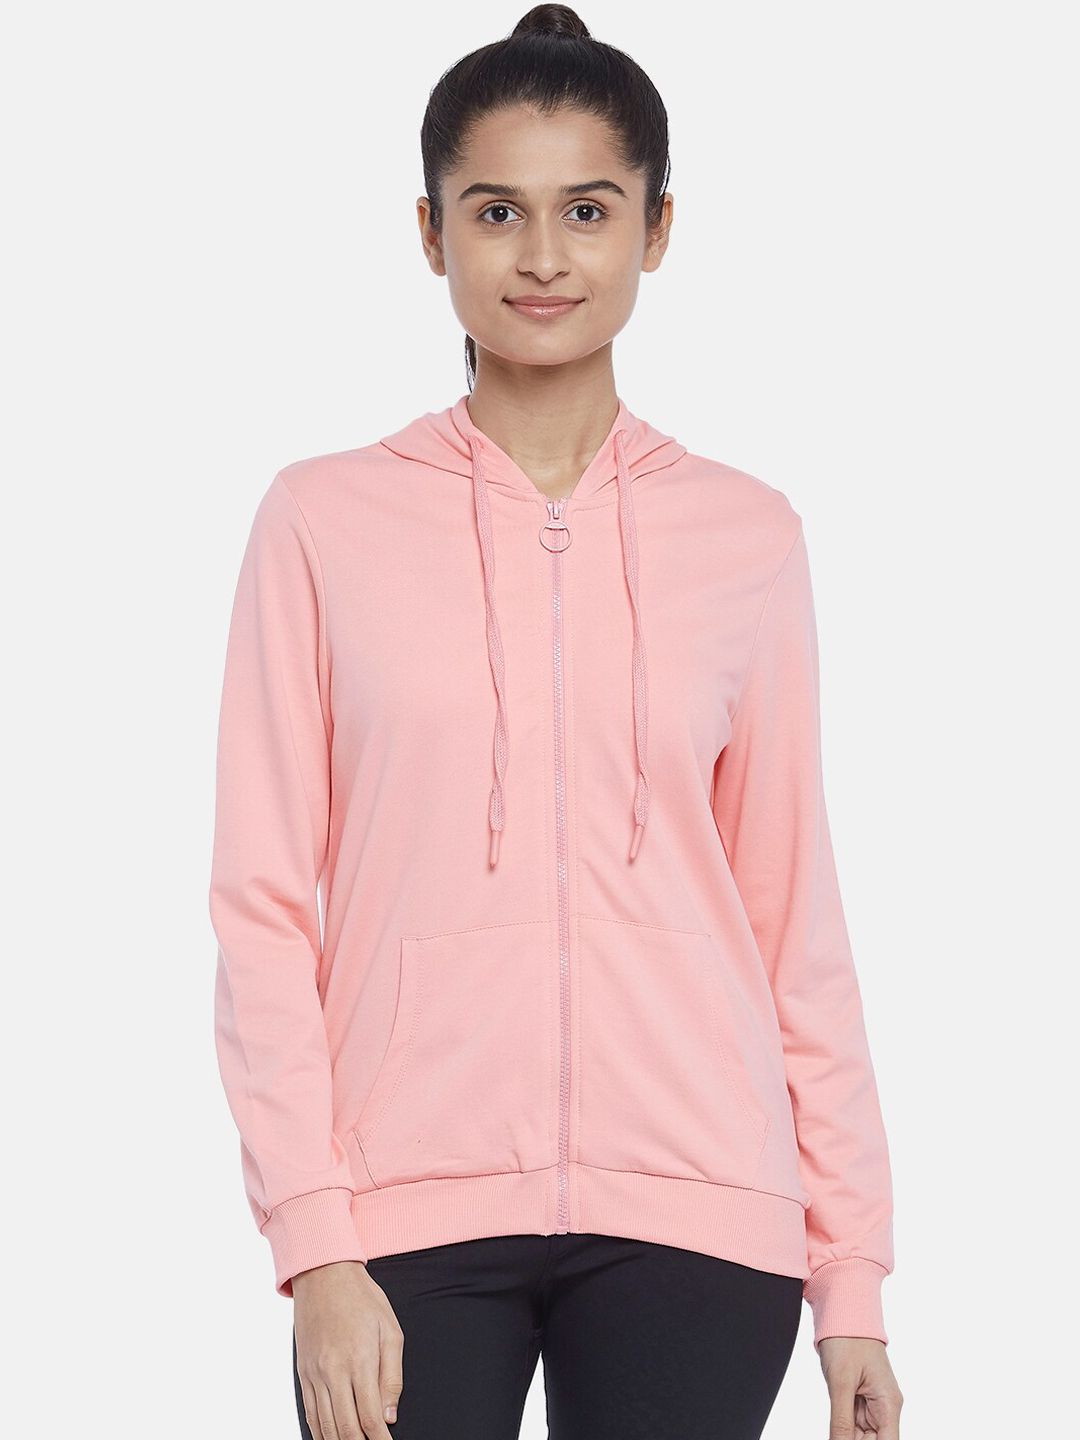 Ajile by Pantaloons Women Pink Hooded Sweatshirt Price in India